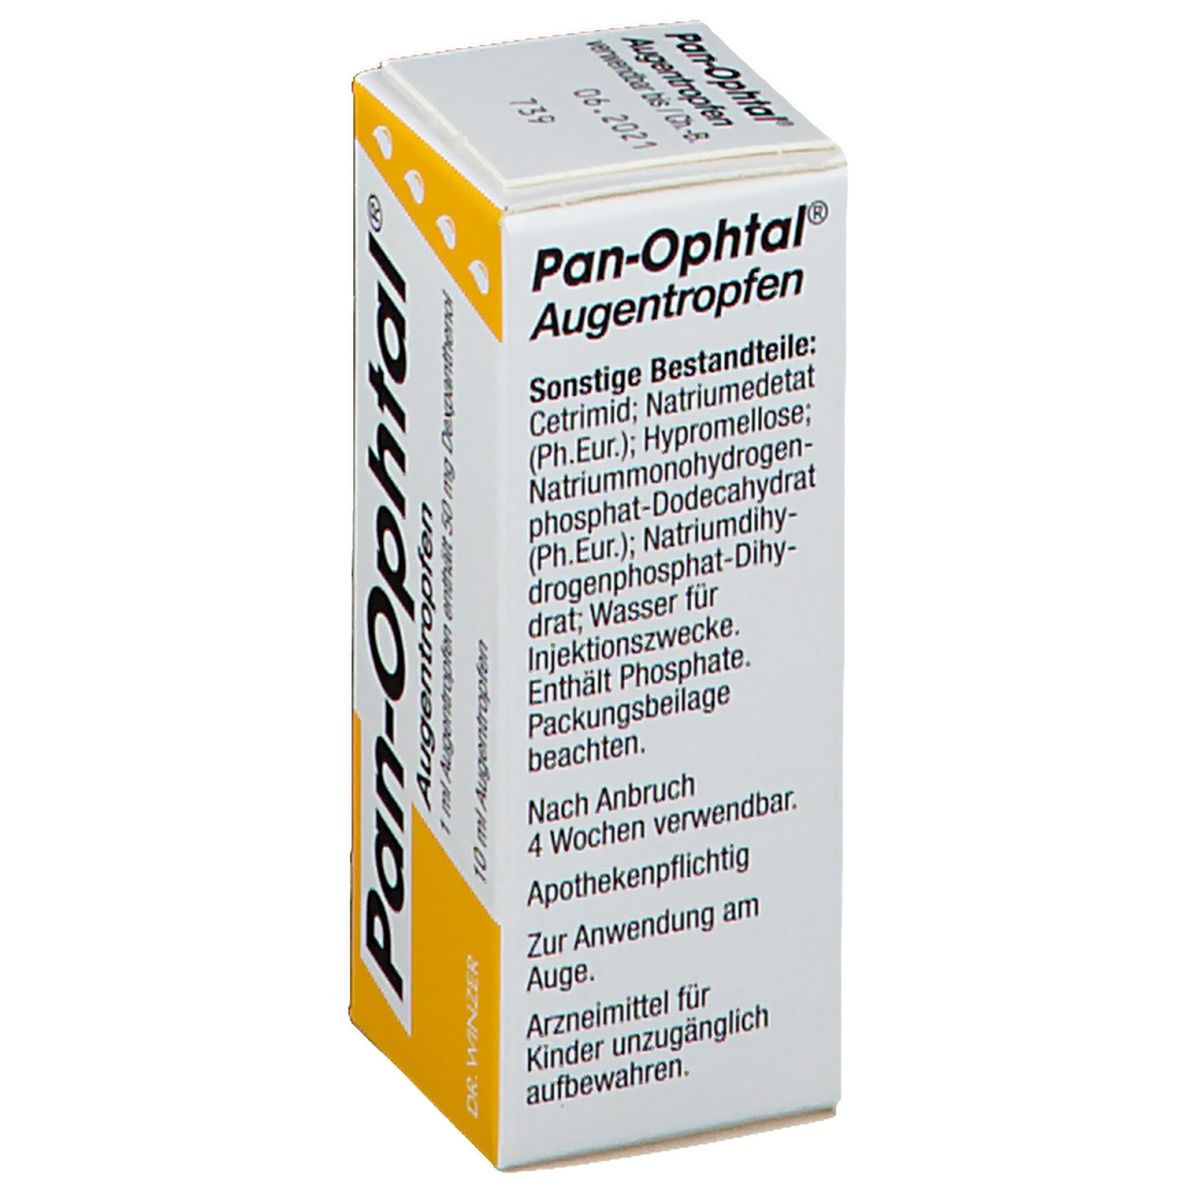 Pan-Ophtal®